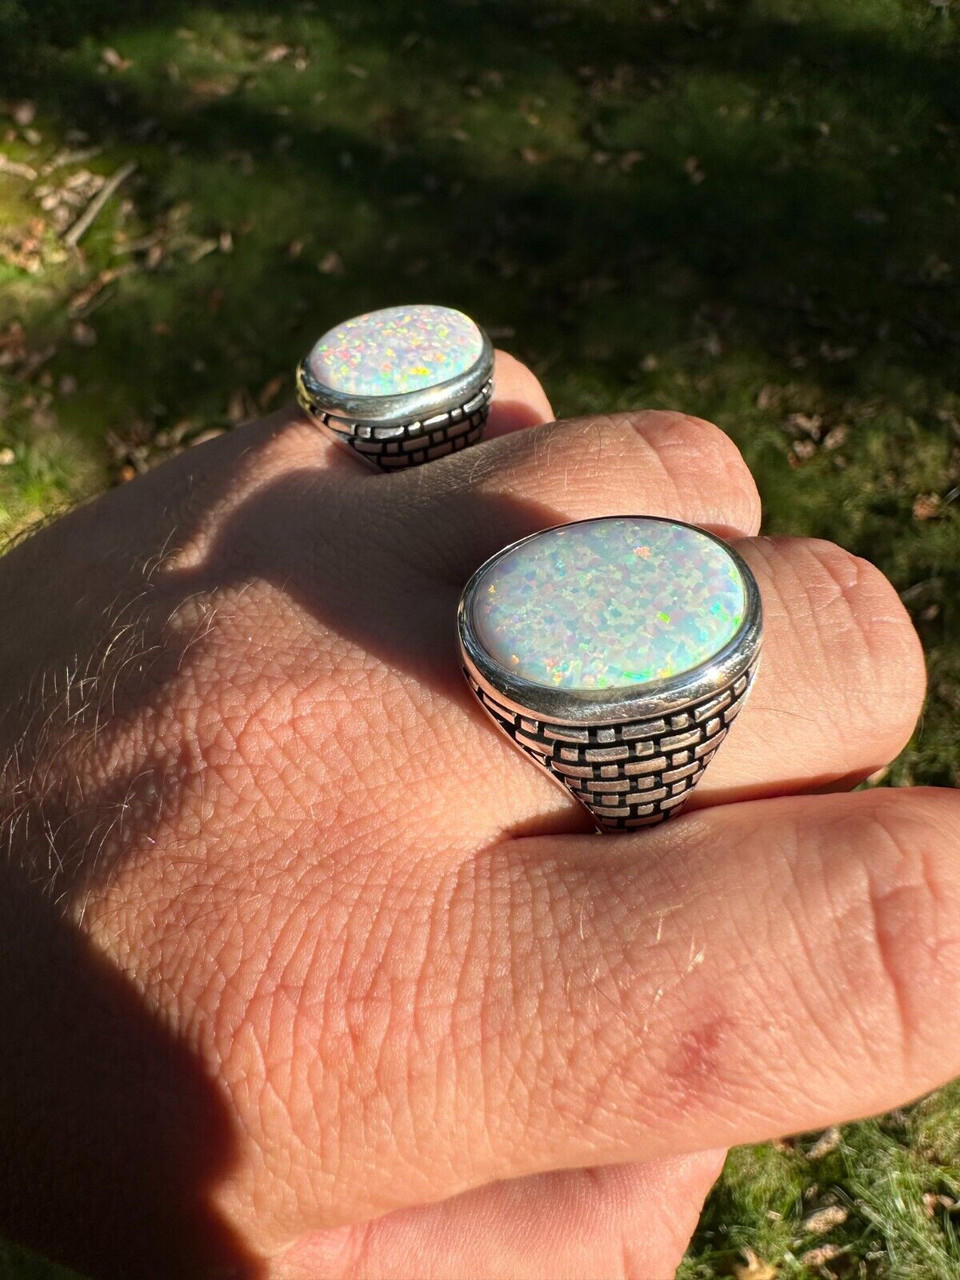 Customize & Buy Turkish Silver Gemstone Rings Online at Grand Bazaar  Jewelers - GBJ4RG4739-1